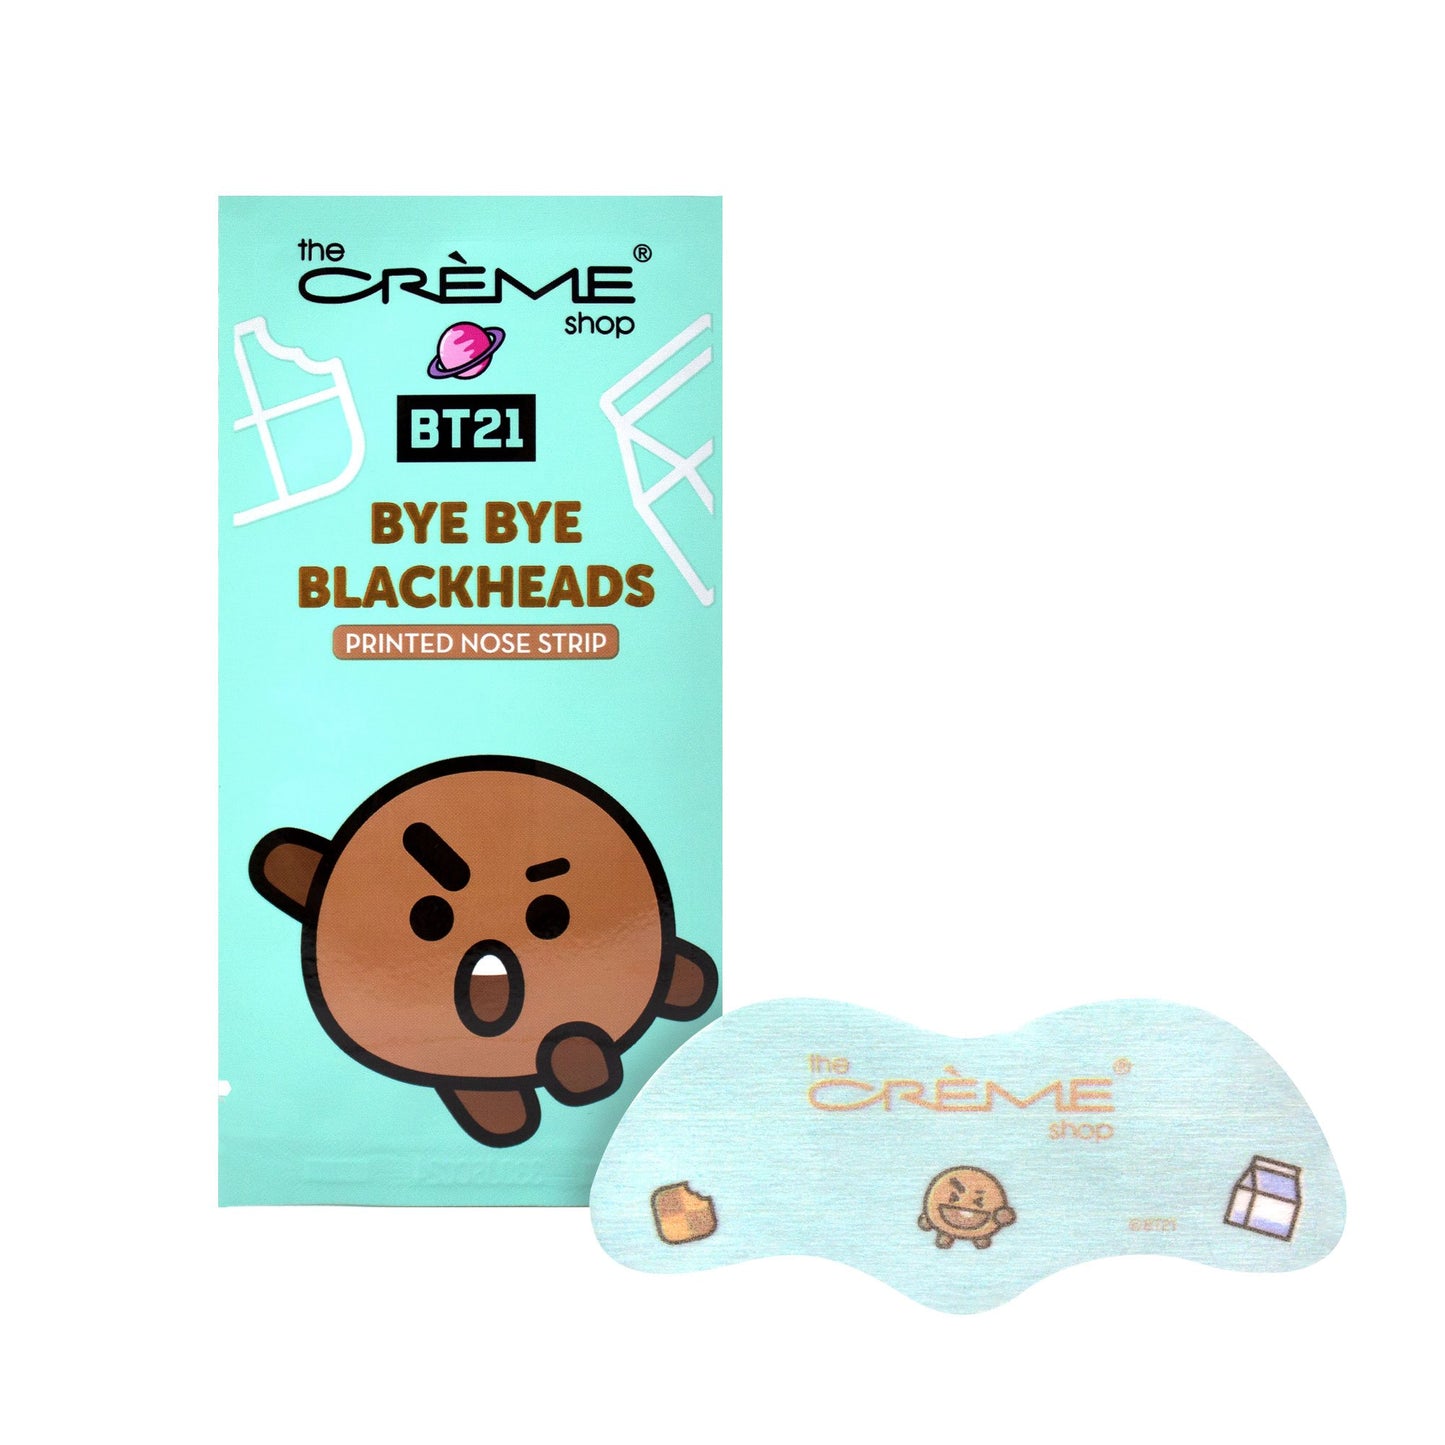 The Crème Shop | BT21: Bye Bye Blackheads - Printed Nose Strips (Set of 16) Blackheads Removers The Crème Shop x BT21 